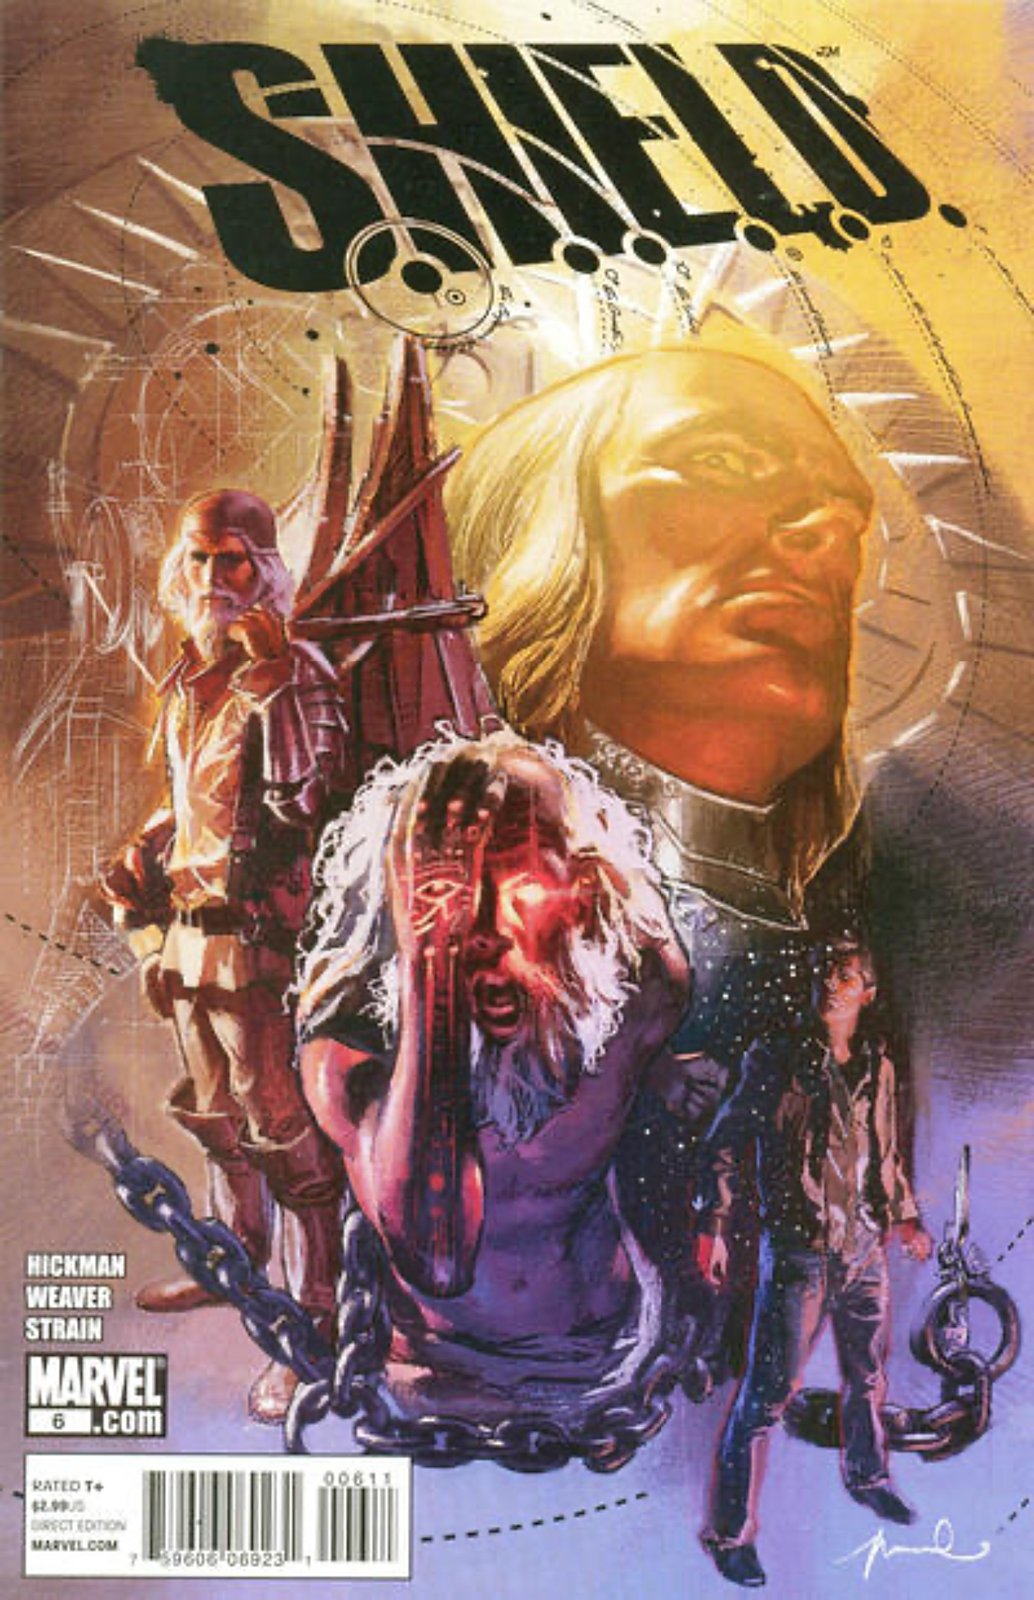 S.H.I.E.L.D. (Shield) #6 (2010-2011) Marvel Comics